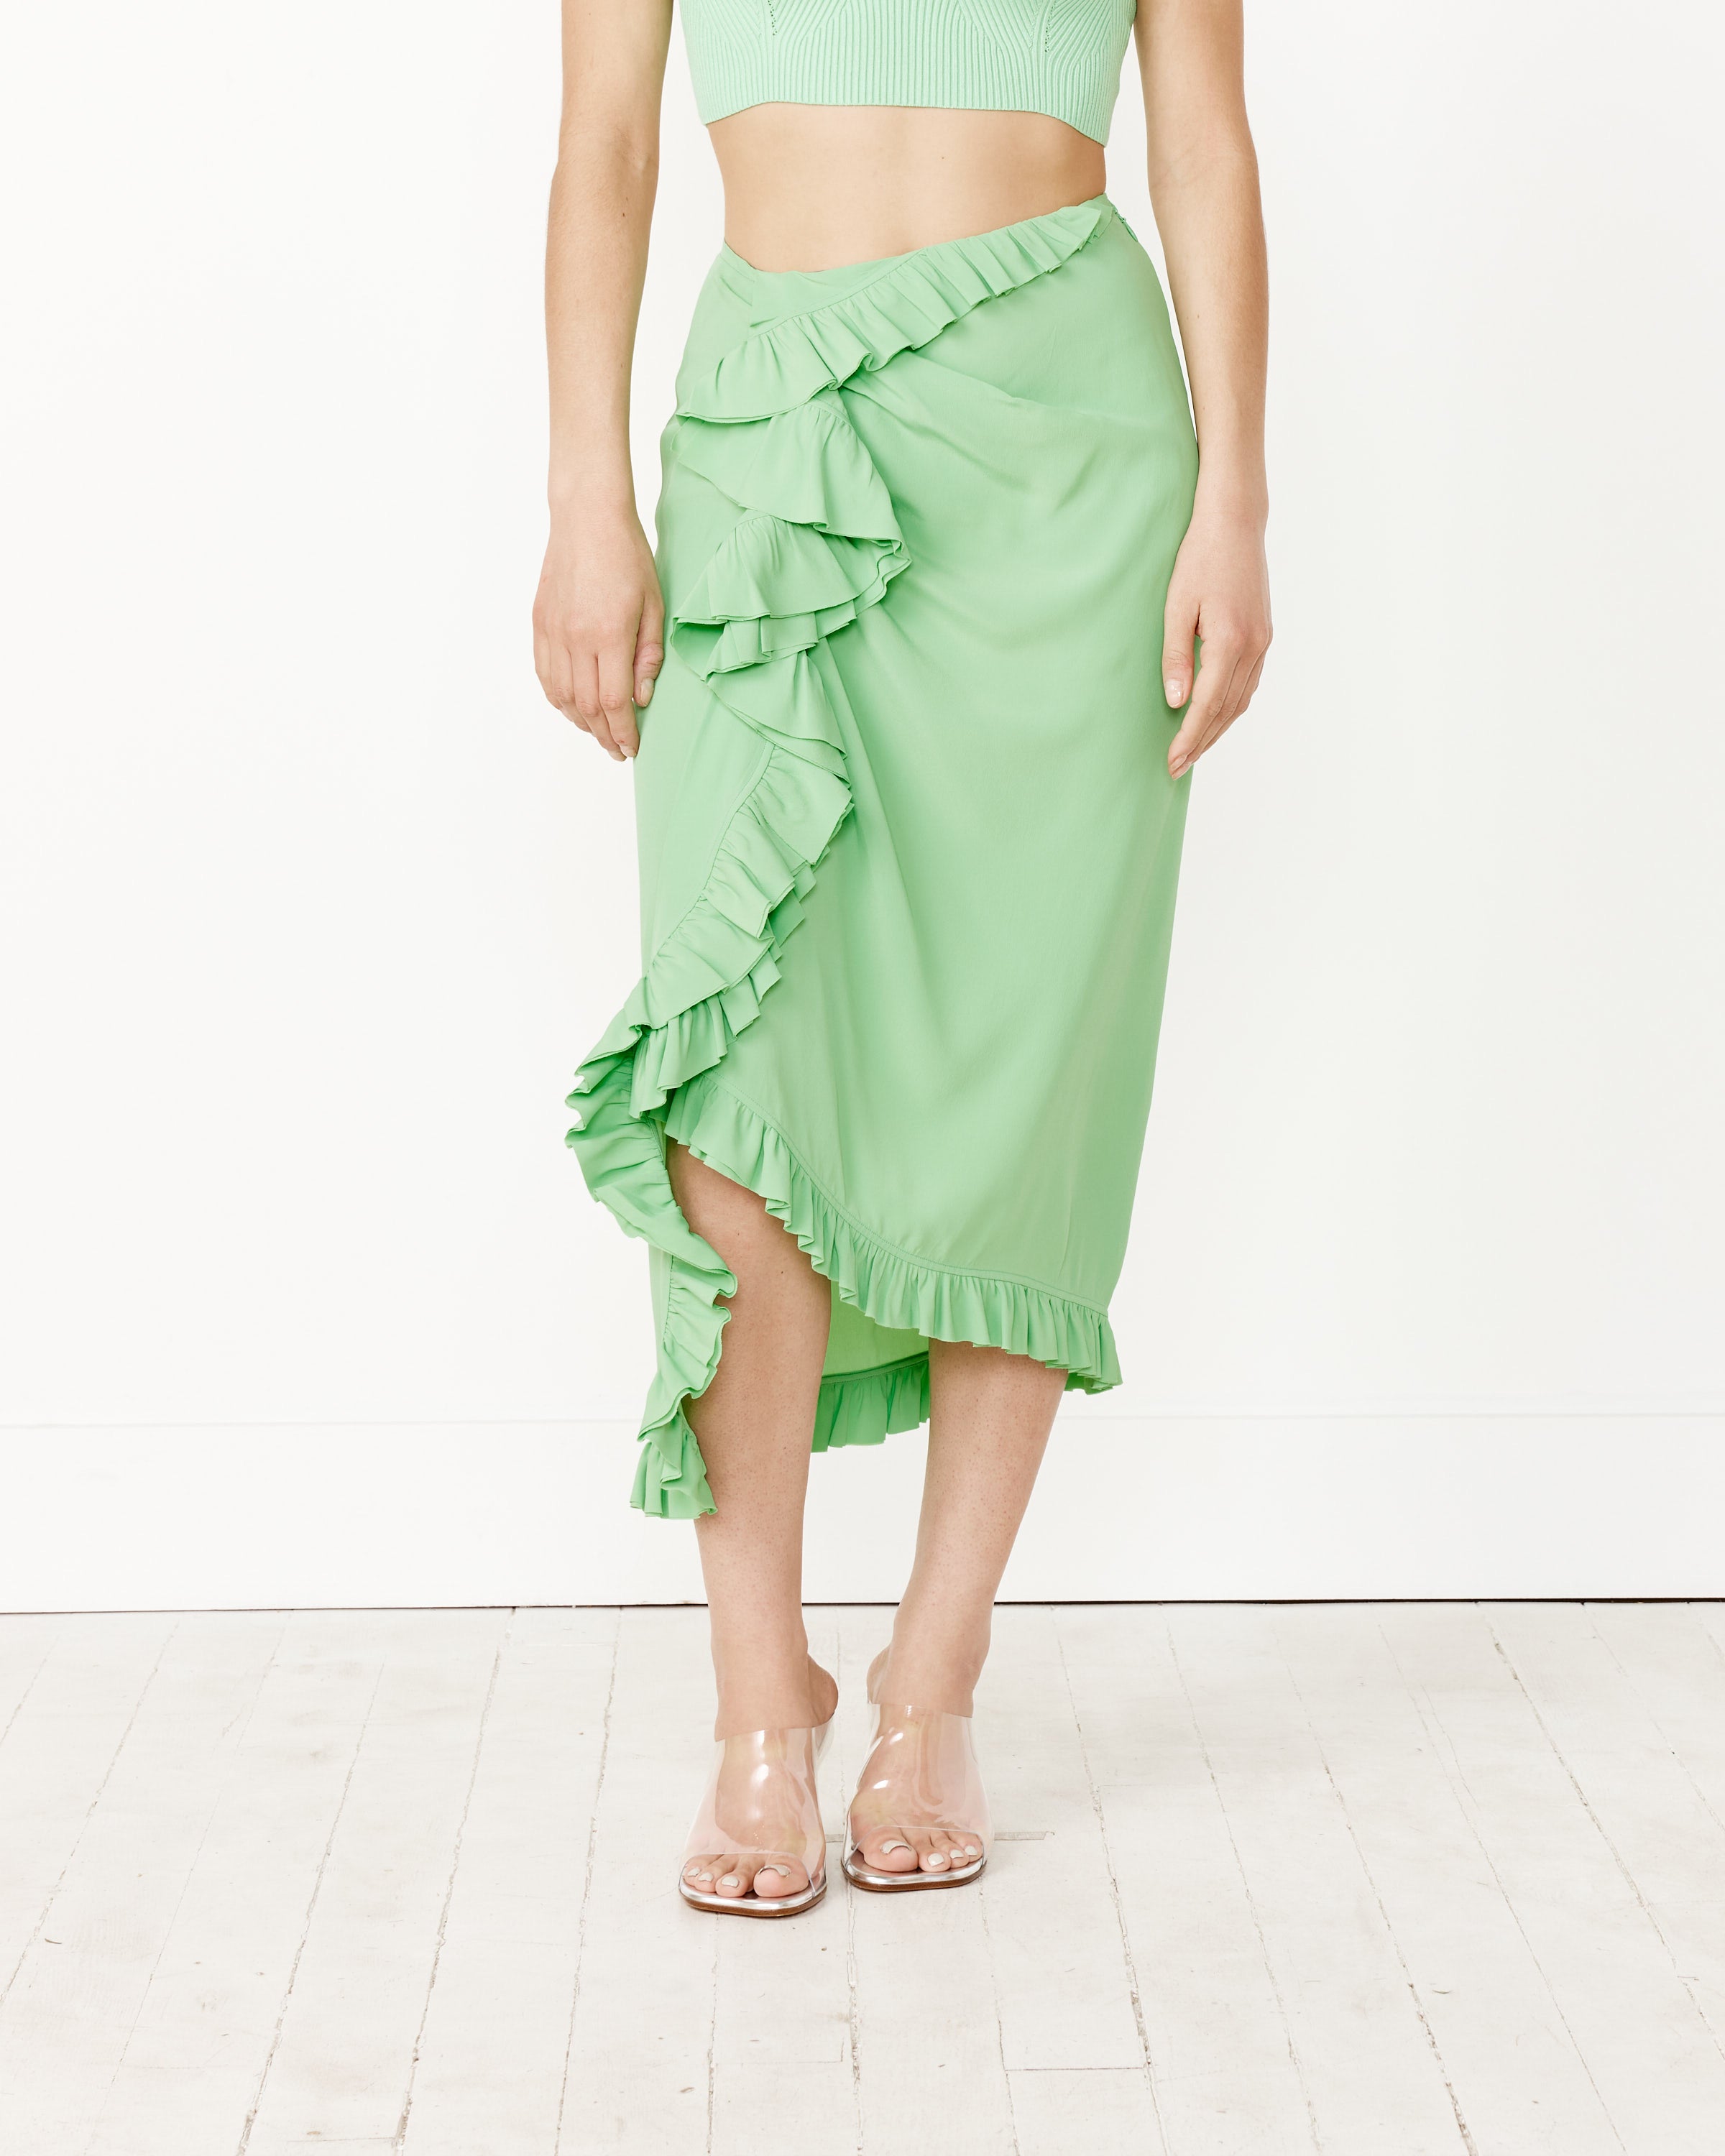 Ruffle Skirt in Light Green – Mohawk General Store